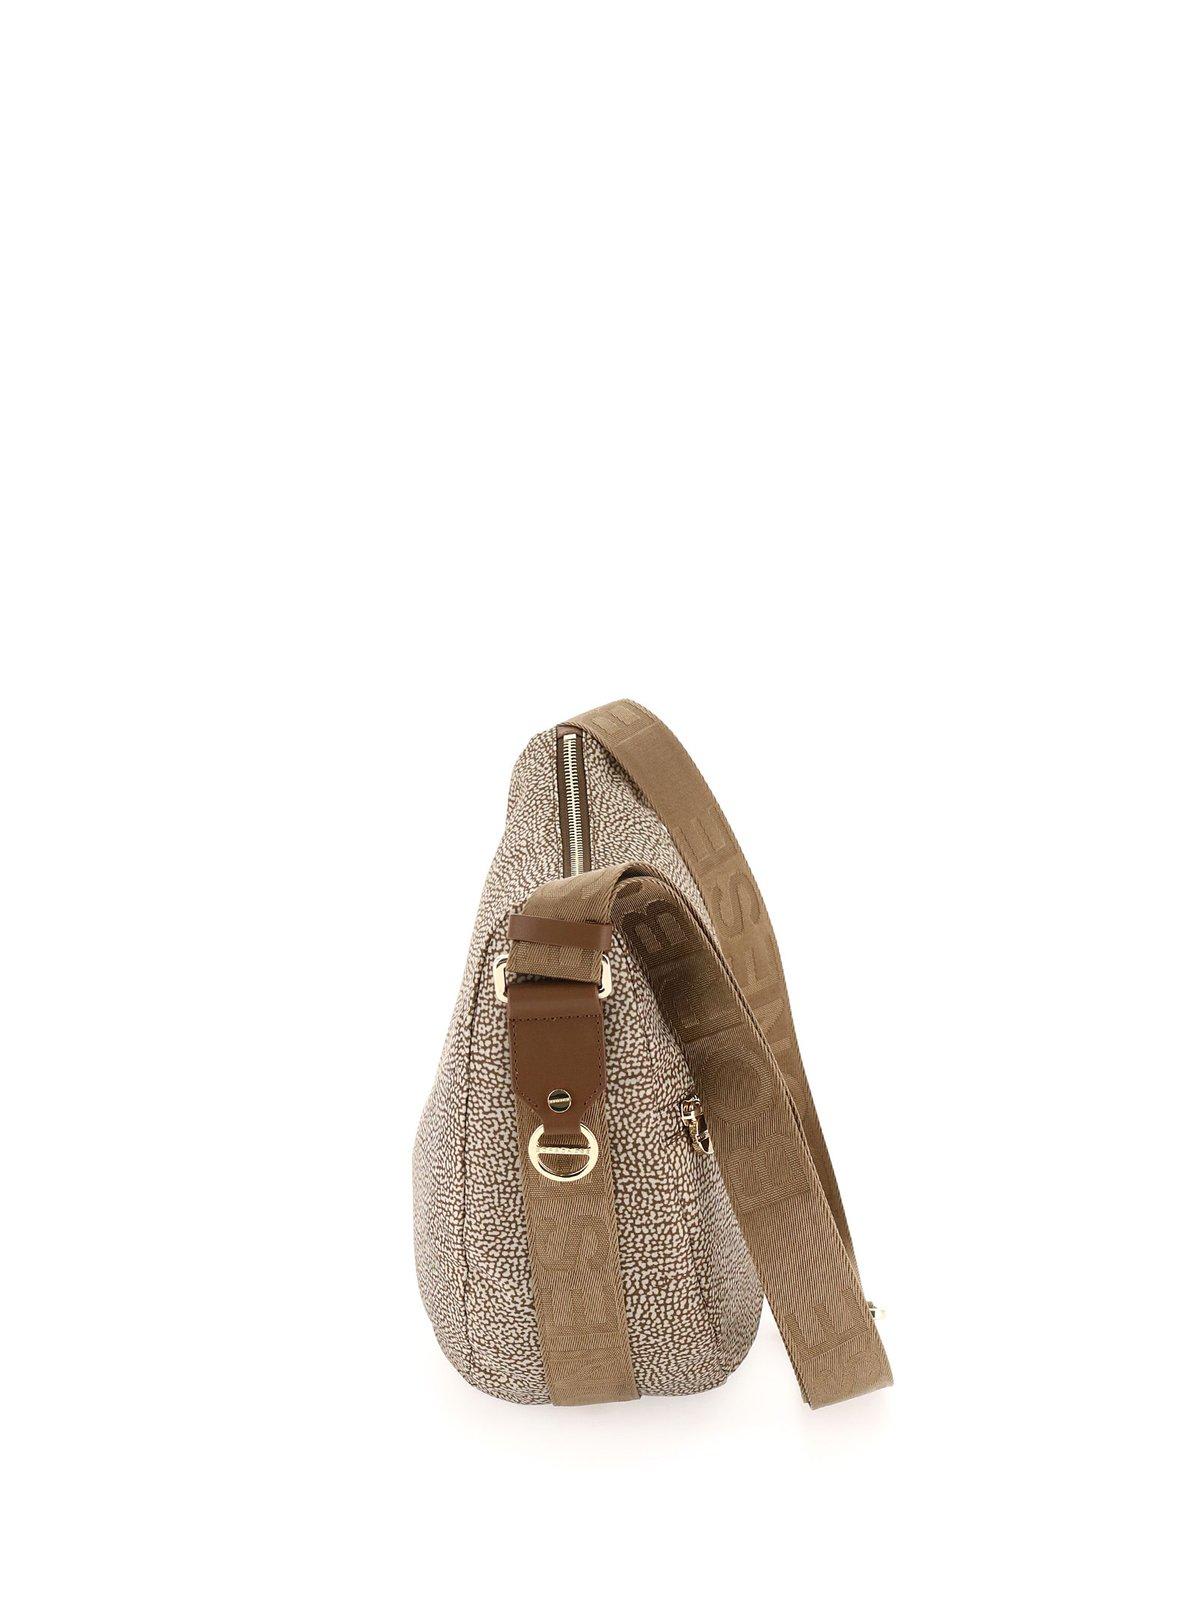 Shop Borbonese Zipped Medium Shoulder Bag In Beige/marrone